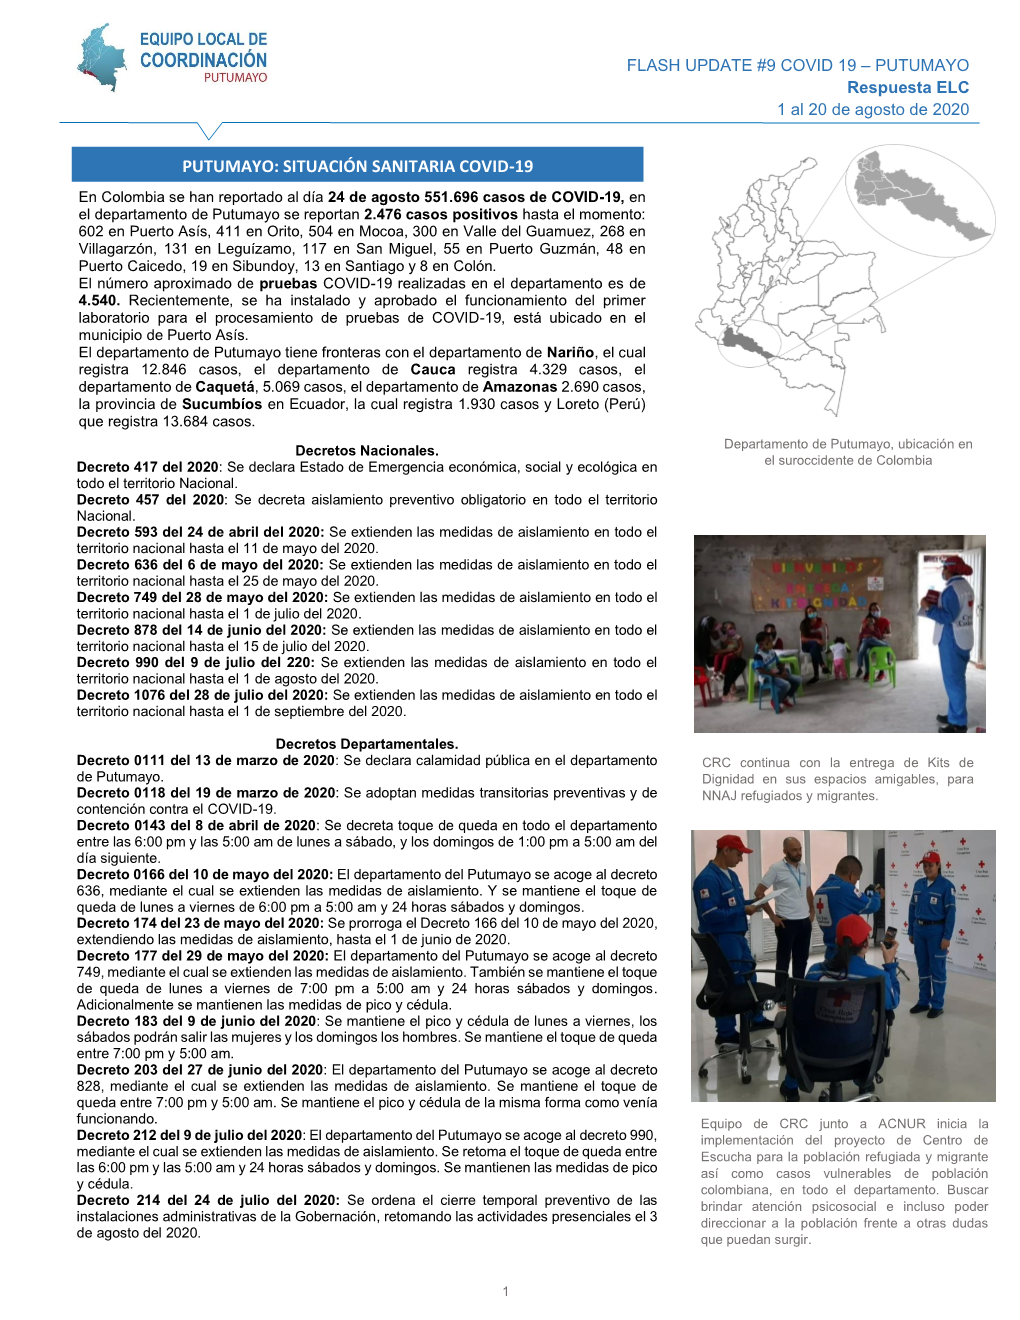 Putumayo: Situación Sanitaria Covid-19